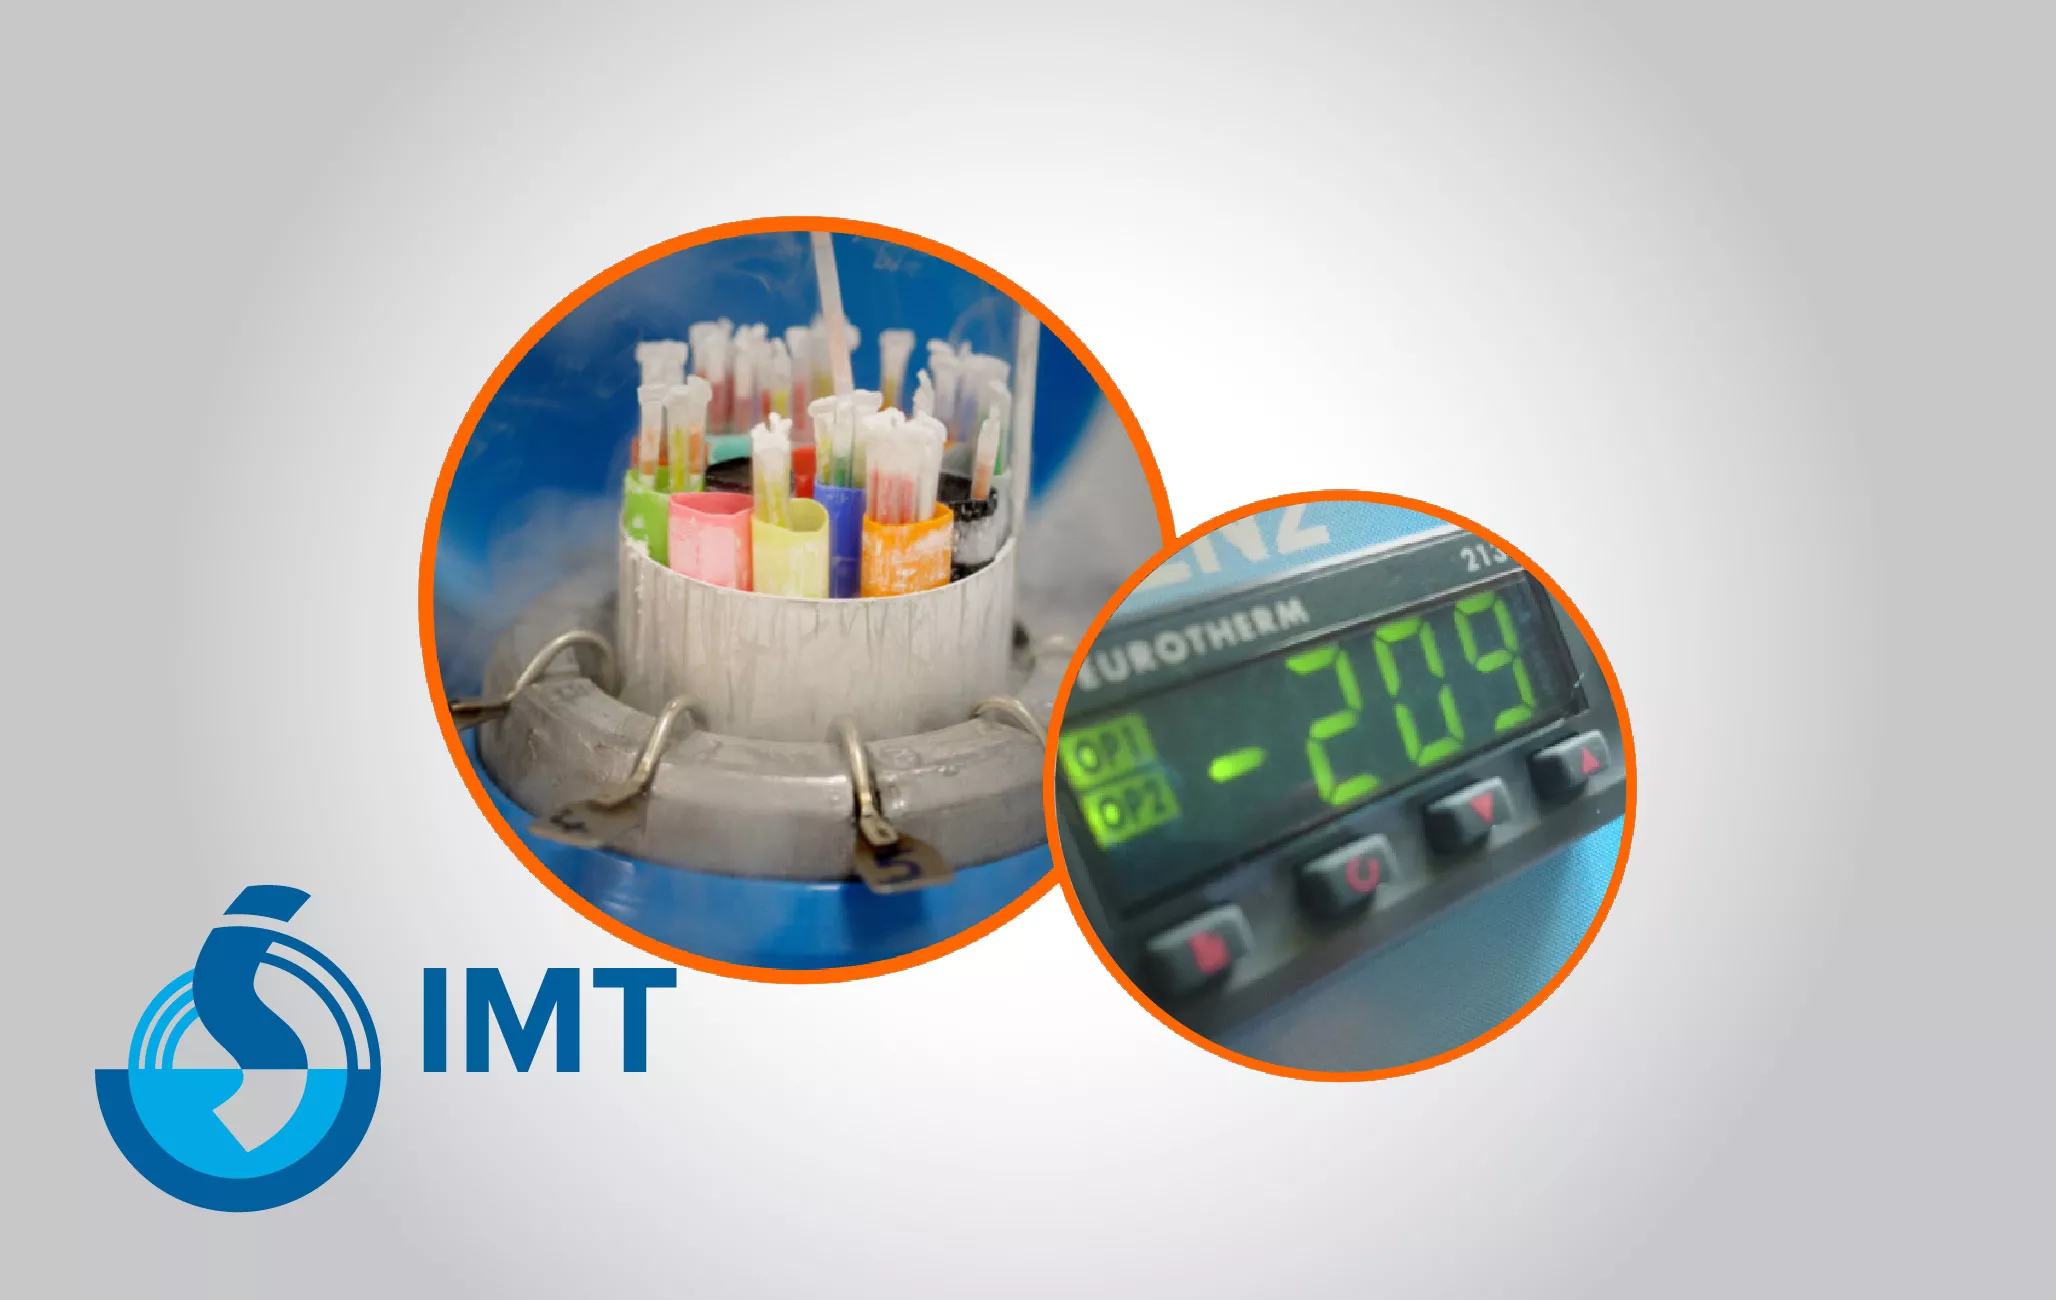 VitMaster IVF Ultra Rapid Vitrification System